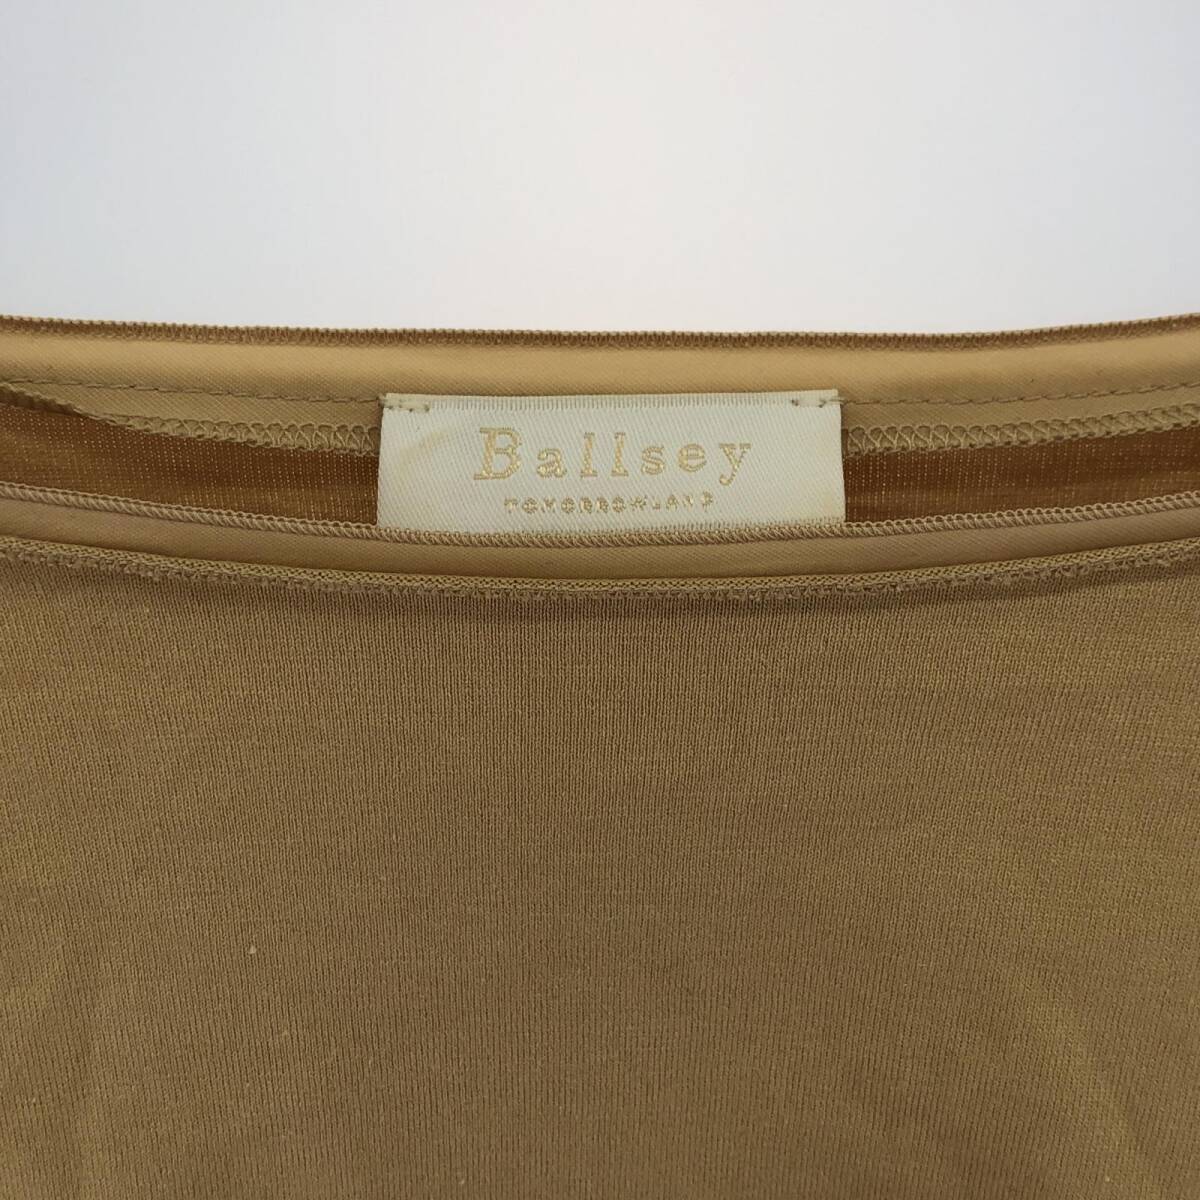 yu. packet OK BALLSEY Ballsey do King car - ring cut and sewn sizeS/ beige lady's 